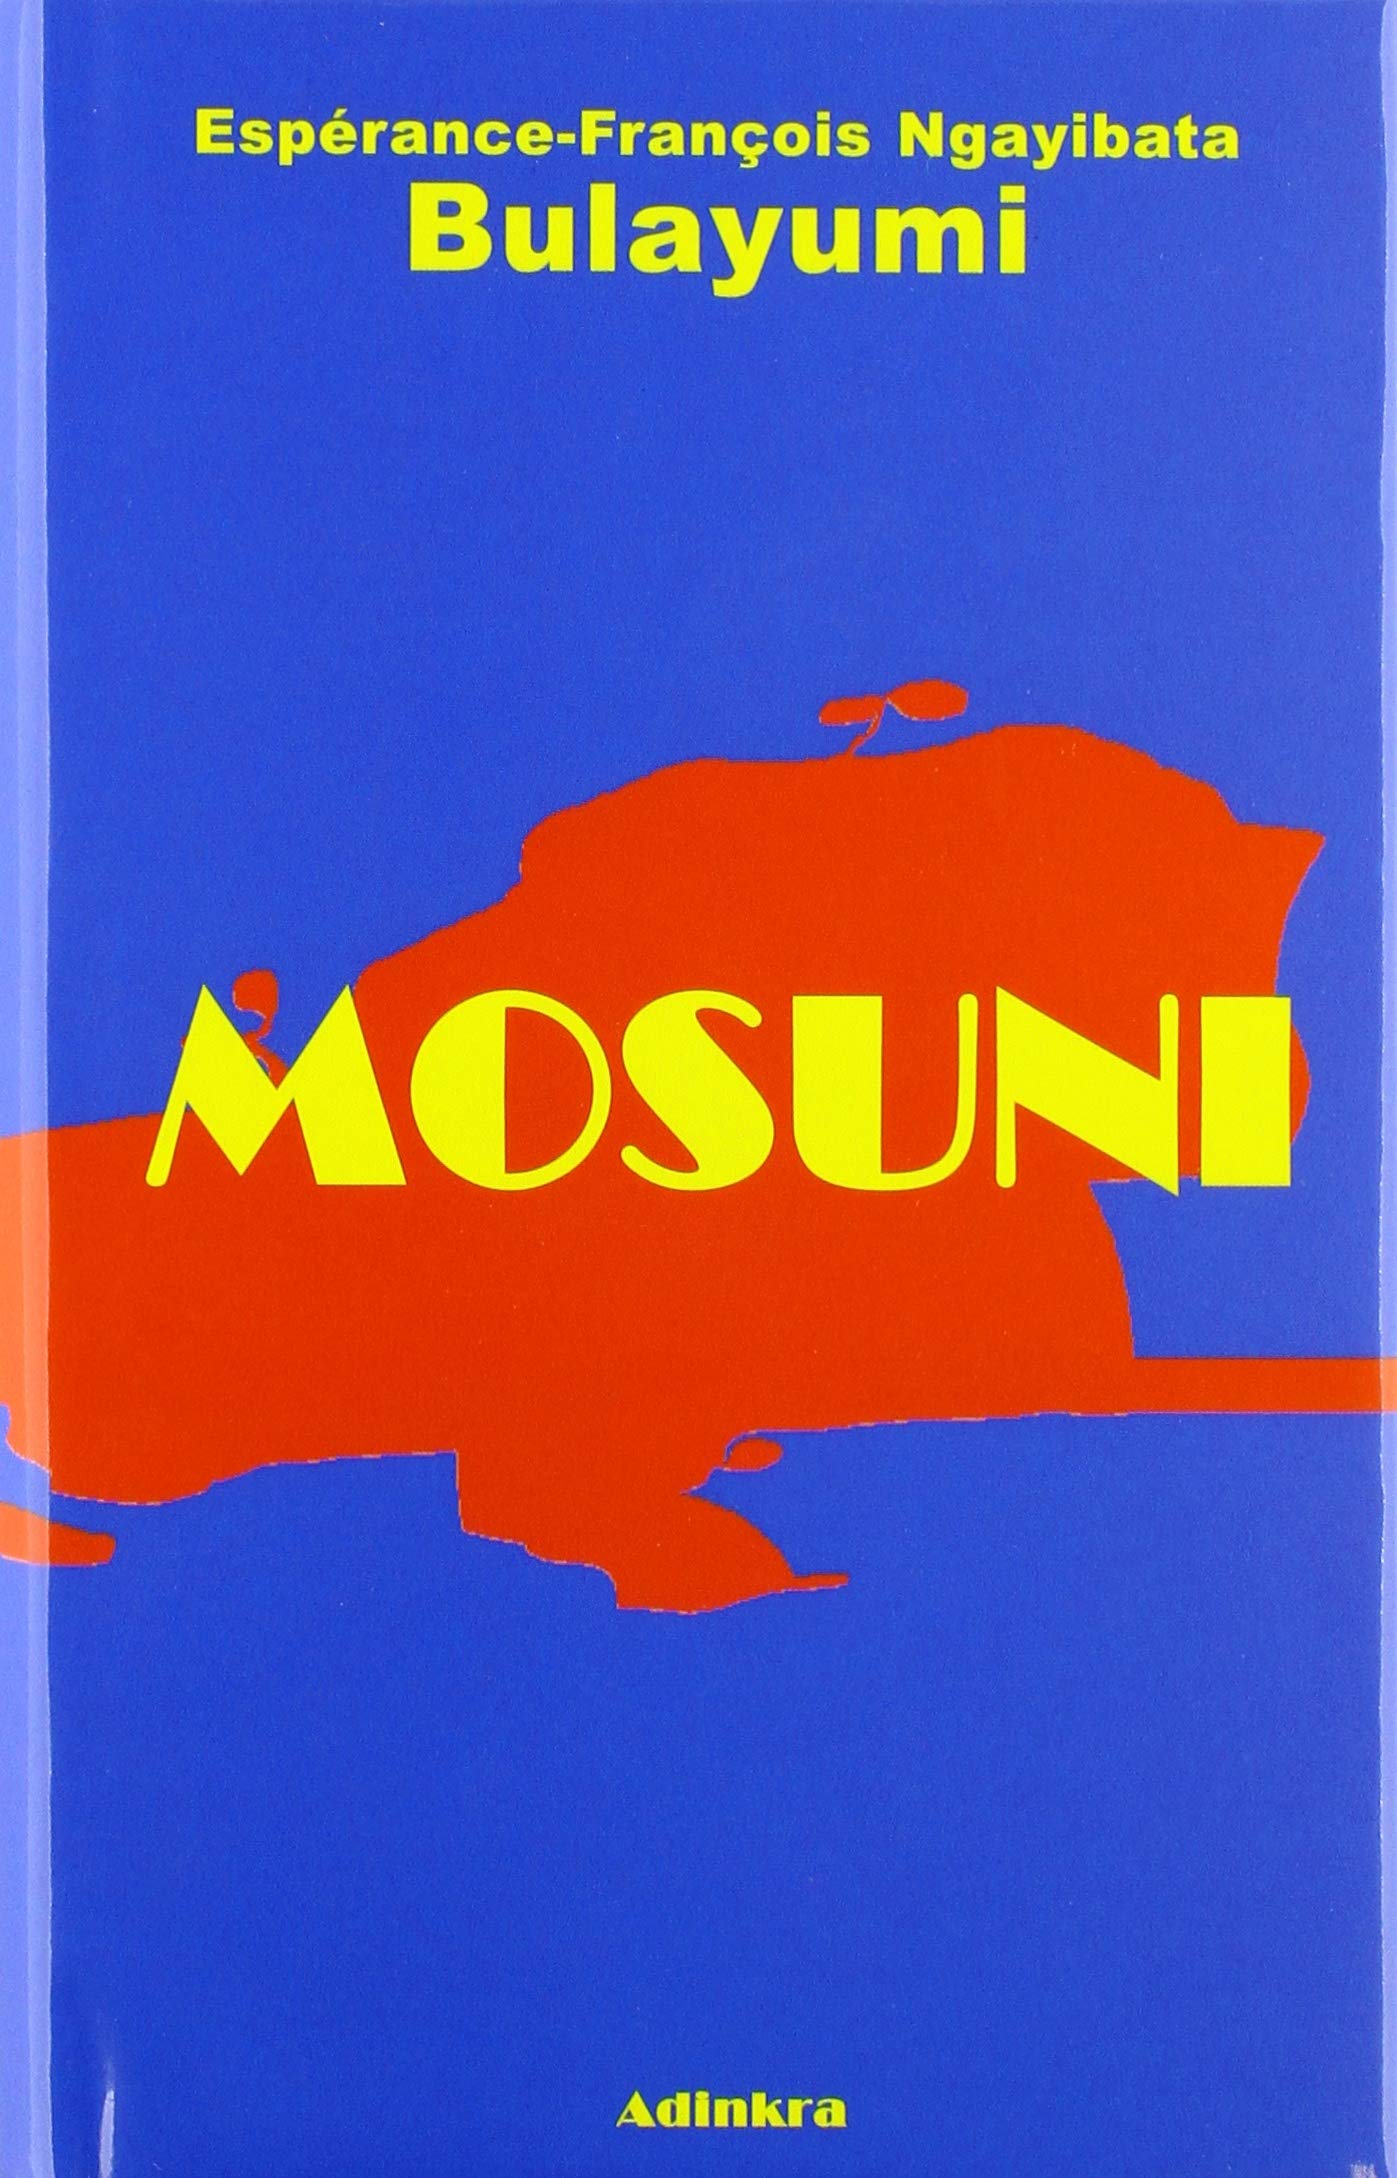 Mosuni